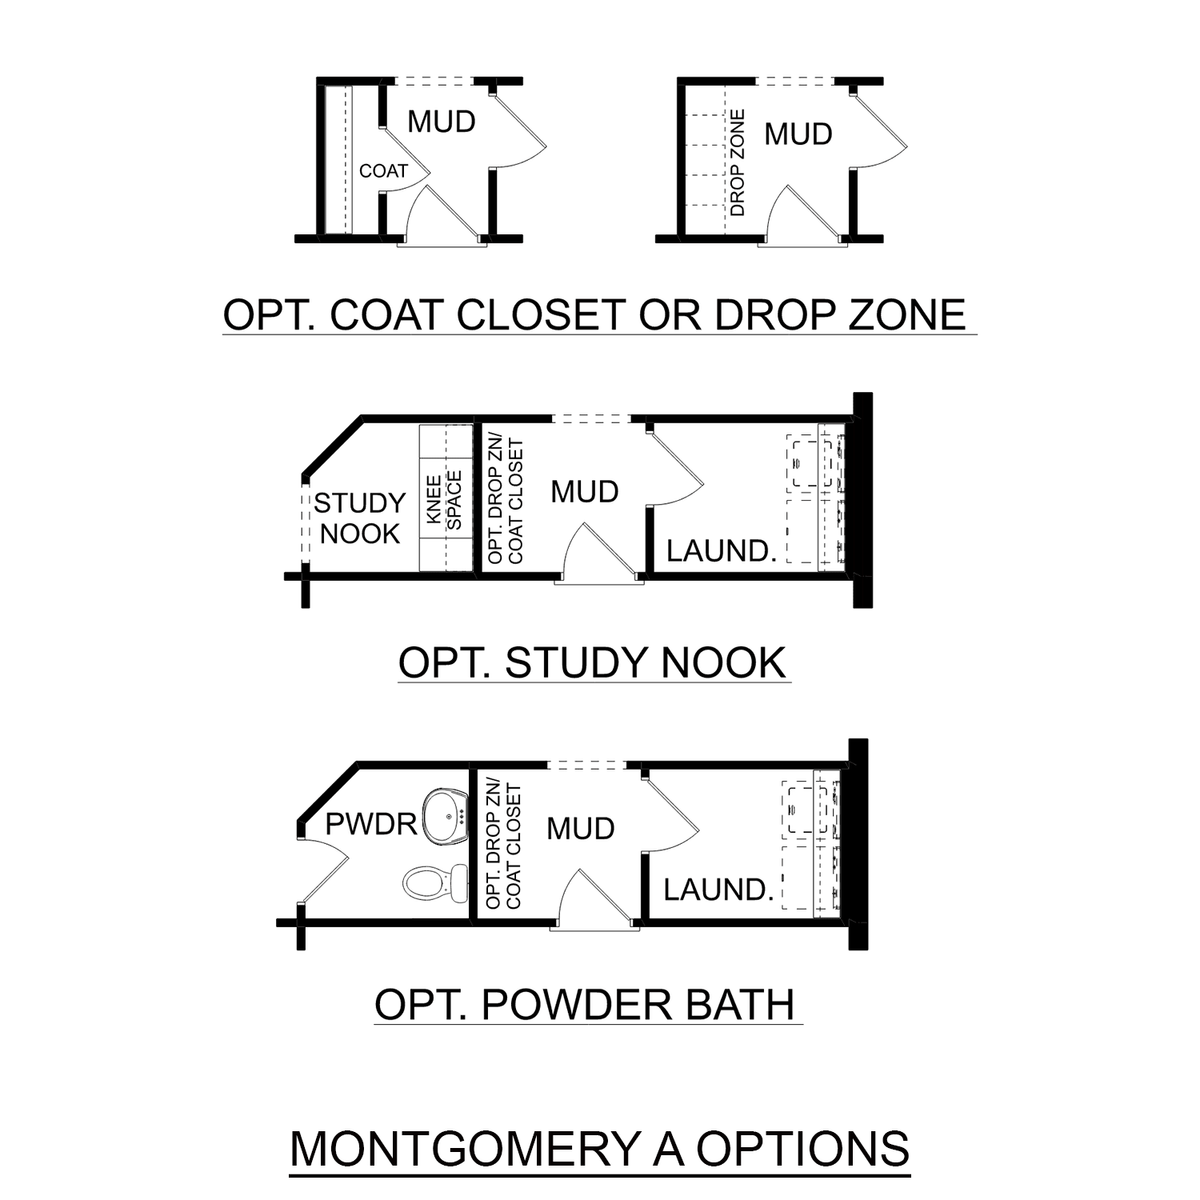 2 - The Montgomery floor plan layout for 2112 Brandon Drive in Davidson Homes' North Ridge community.